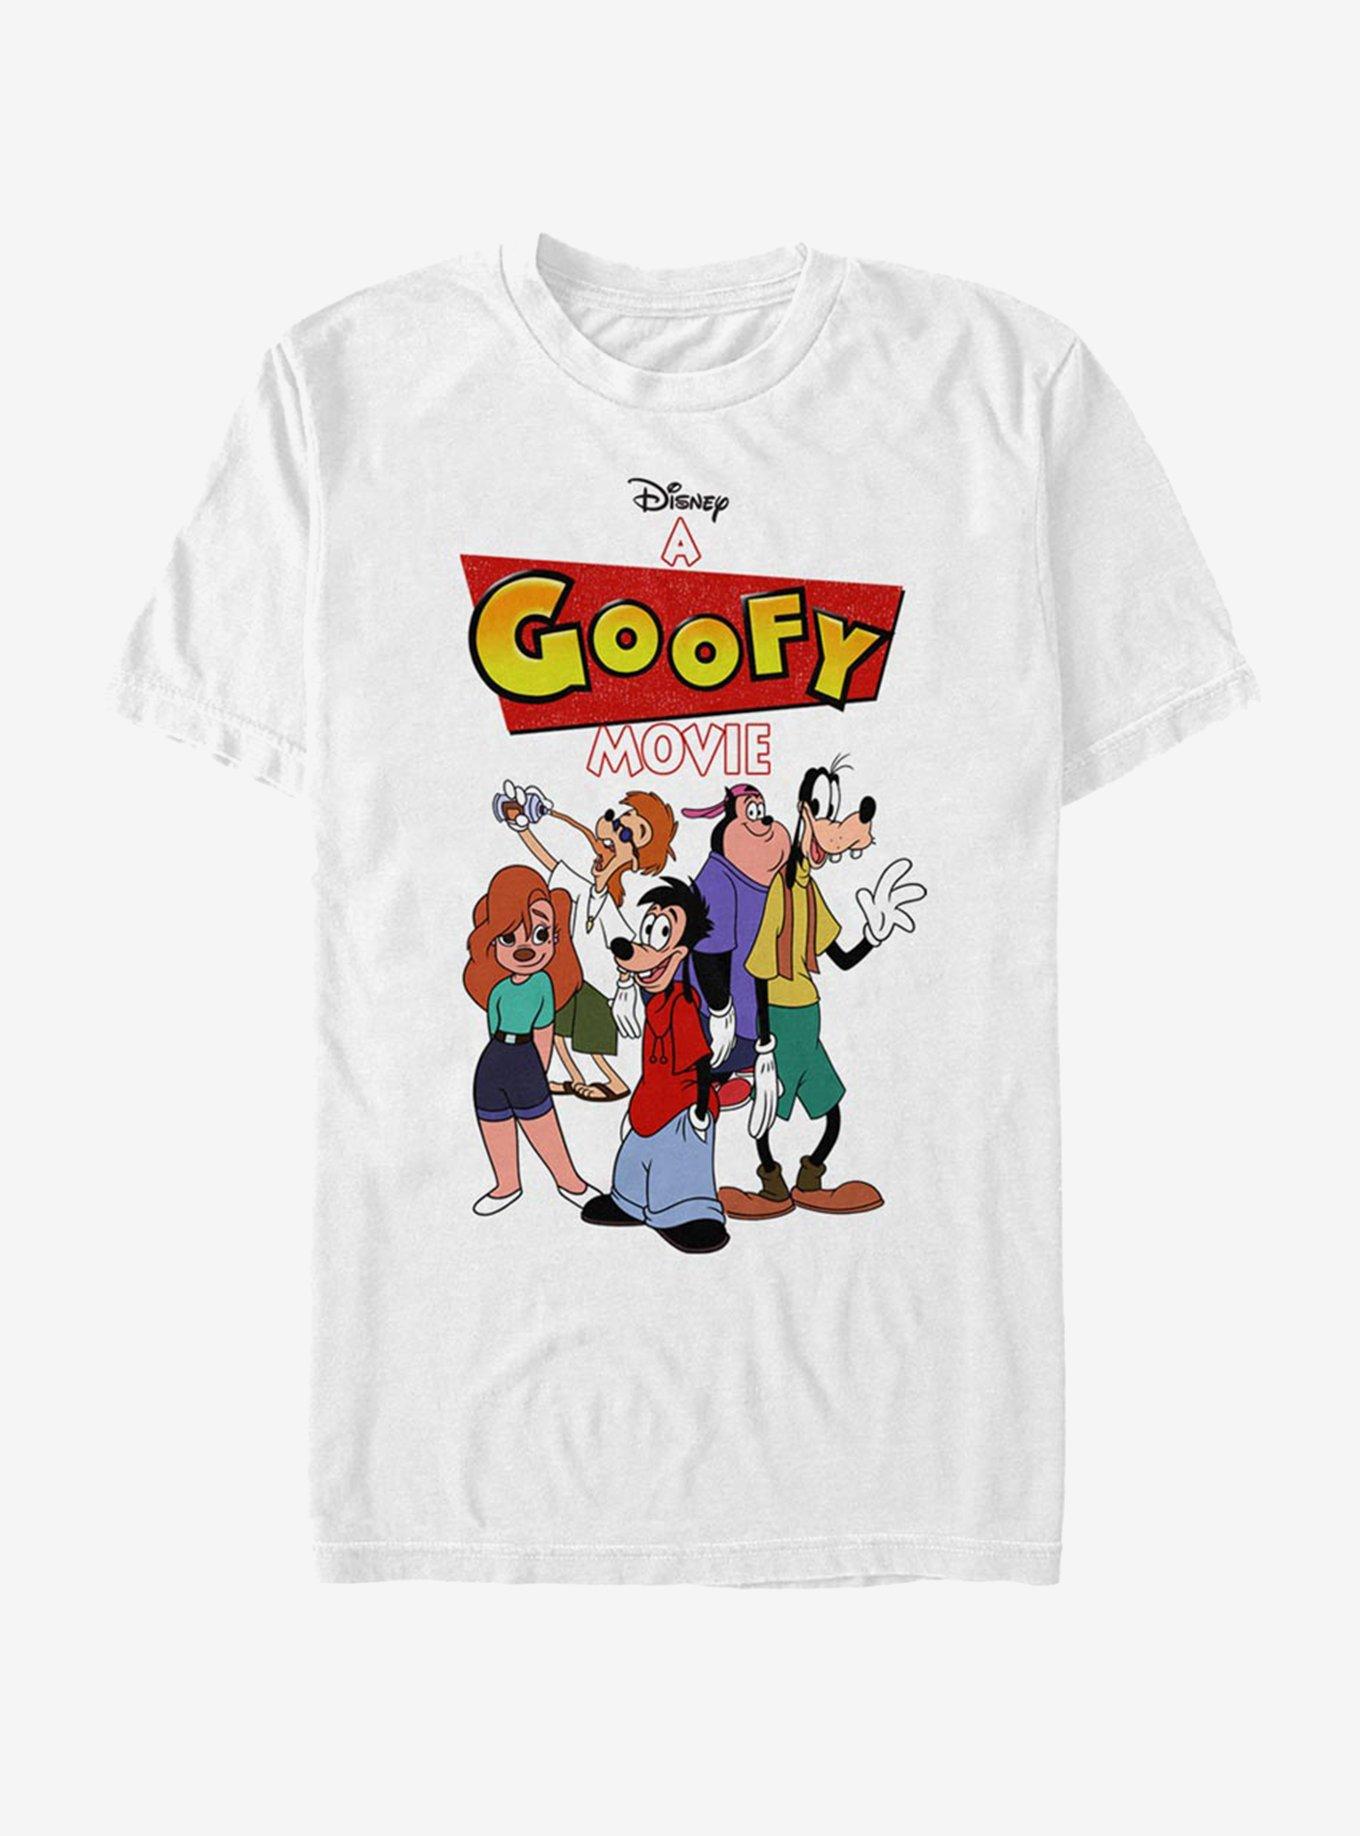 Disney A Goofy Movie Powerline Tour Hoodie Hot Topic Exclusive